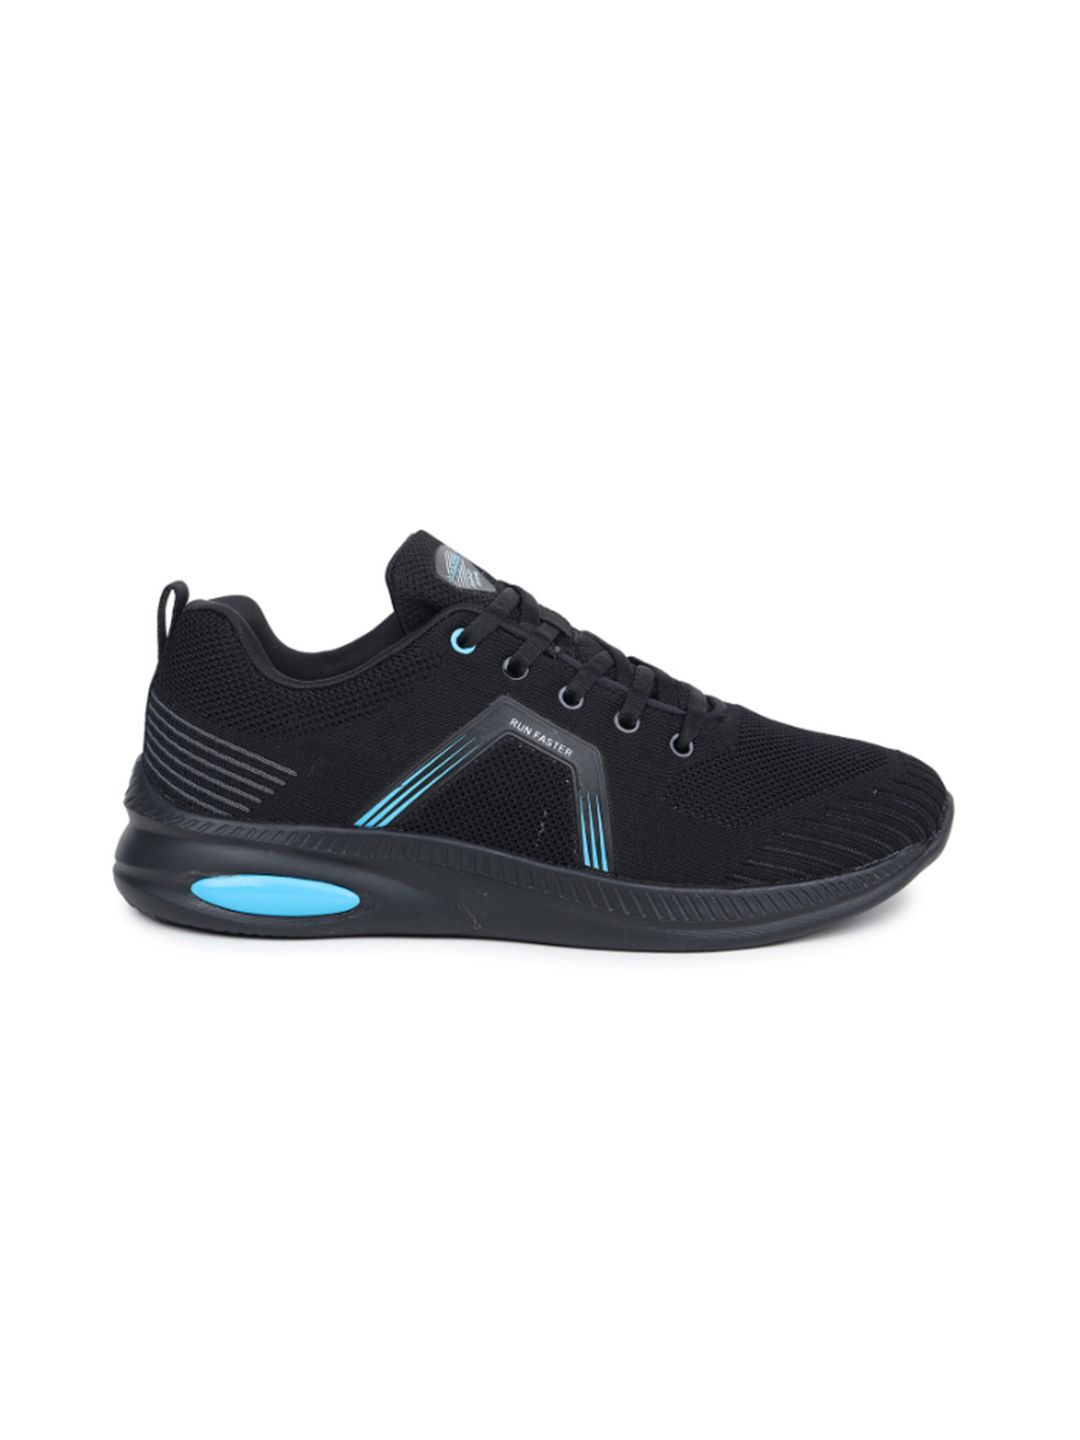 Buy Men Black & Turquoise Blue STINGER Sports Shoes From Fancode Shop.